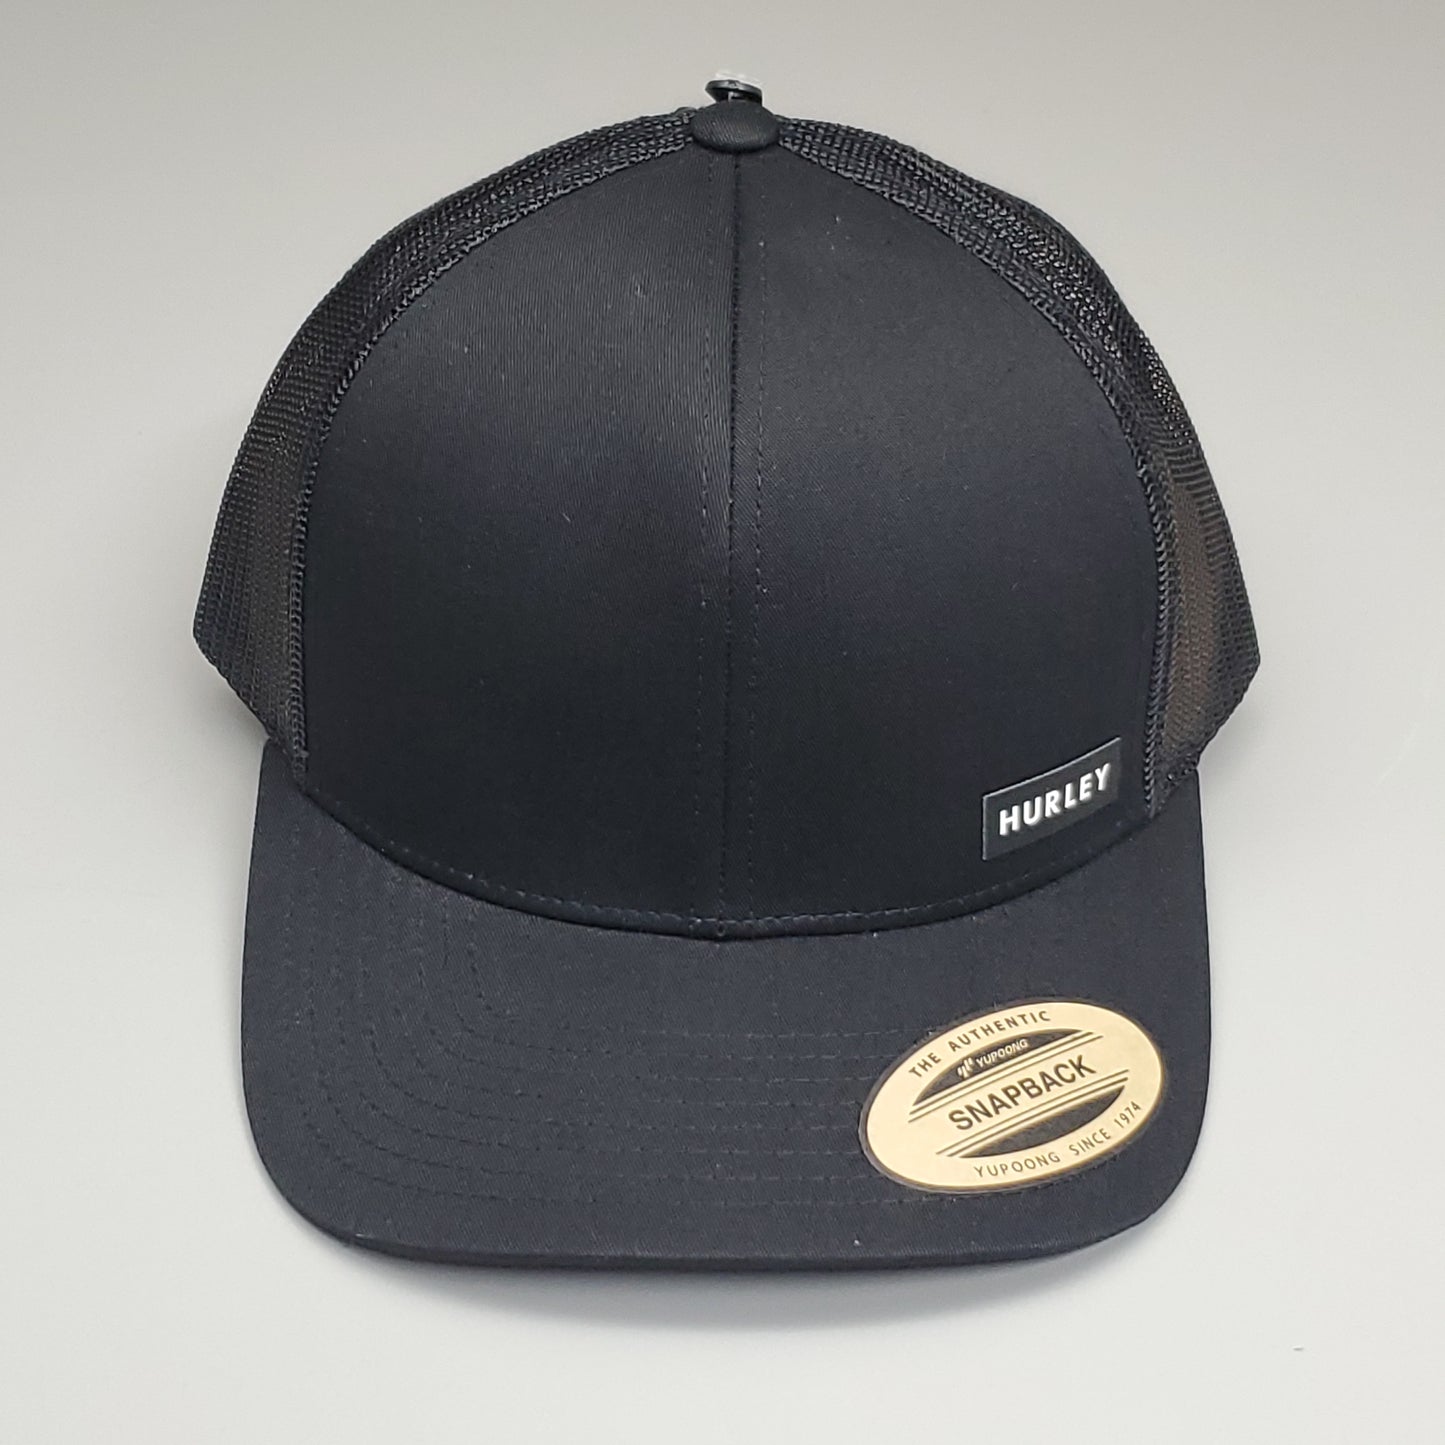 HURLEY Major Trucker Baseball Cap Mesh Snapback Hat One Size Black (New)